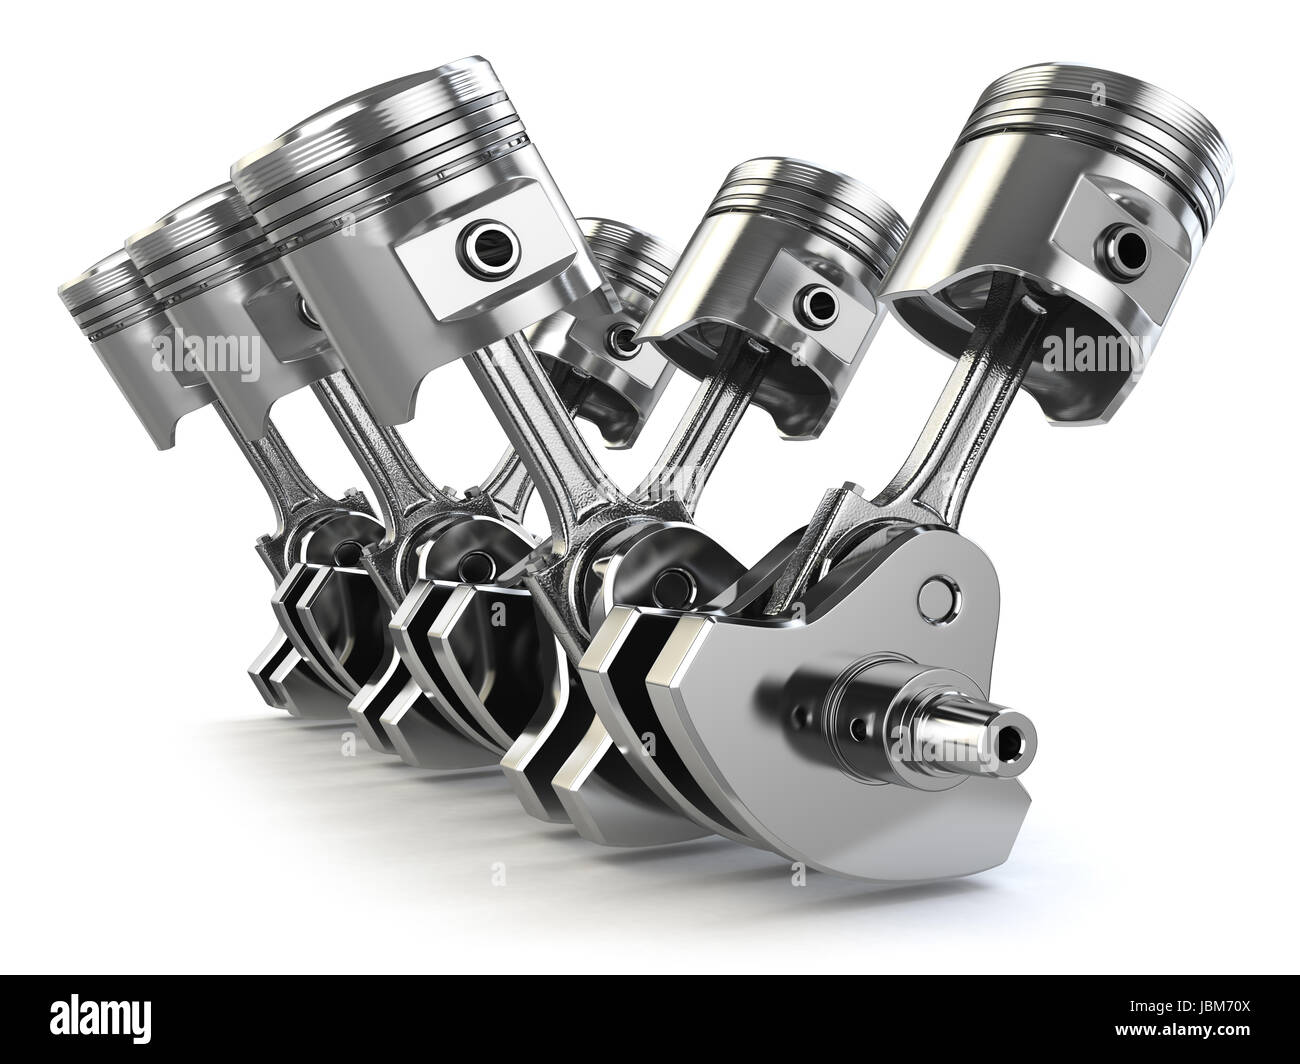 V6 engine pistons and crankshaft isolated on white background. 3d illustration Stock Photo